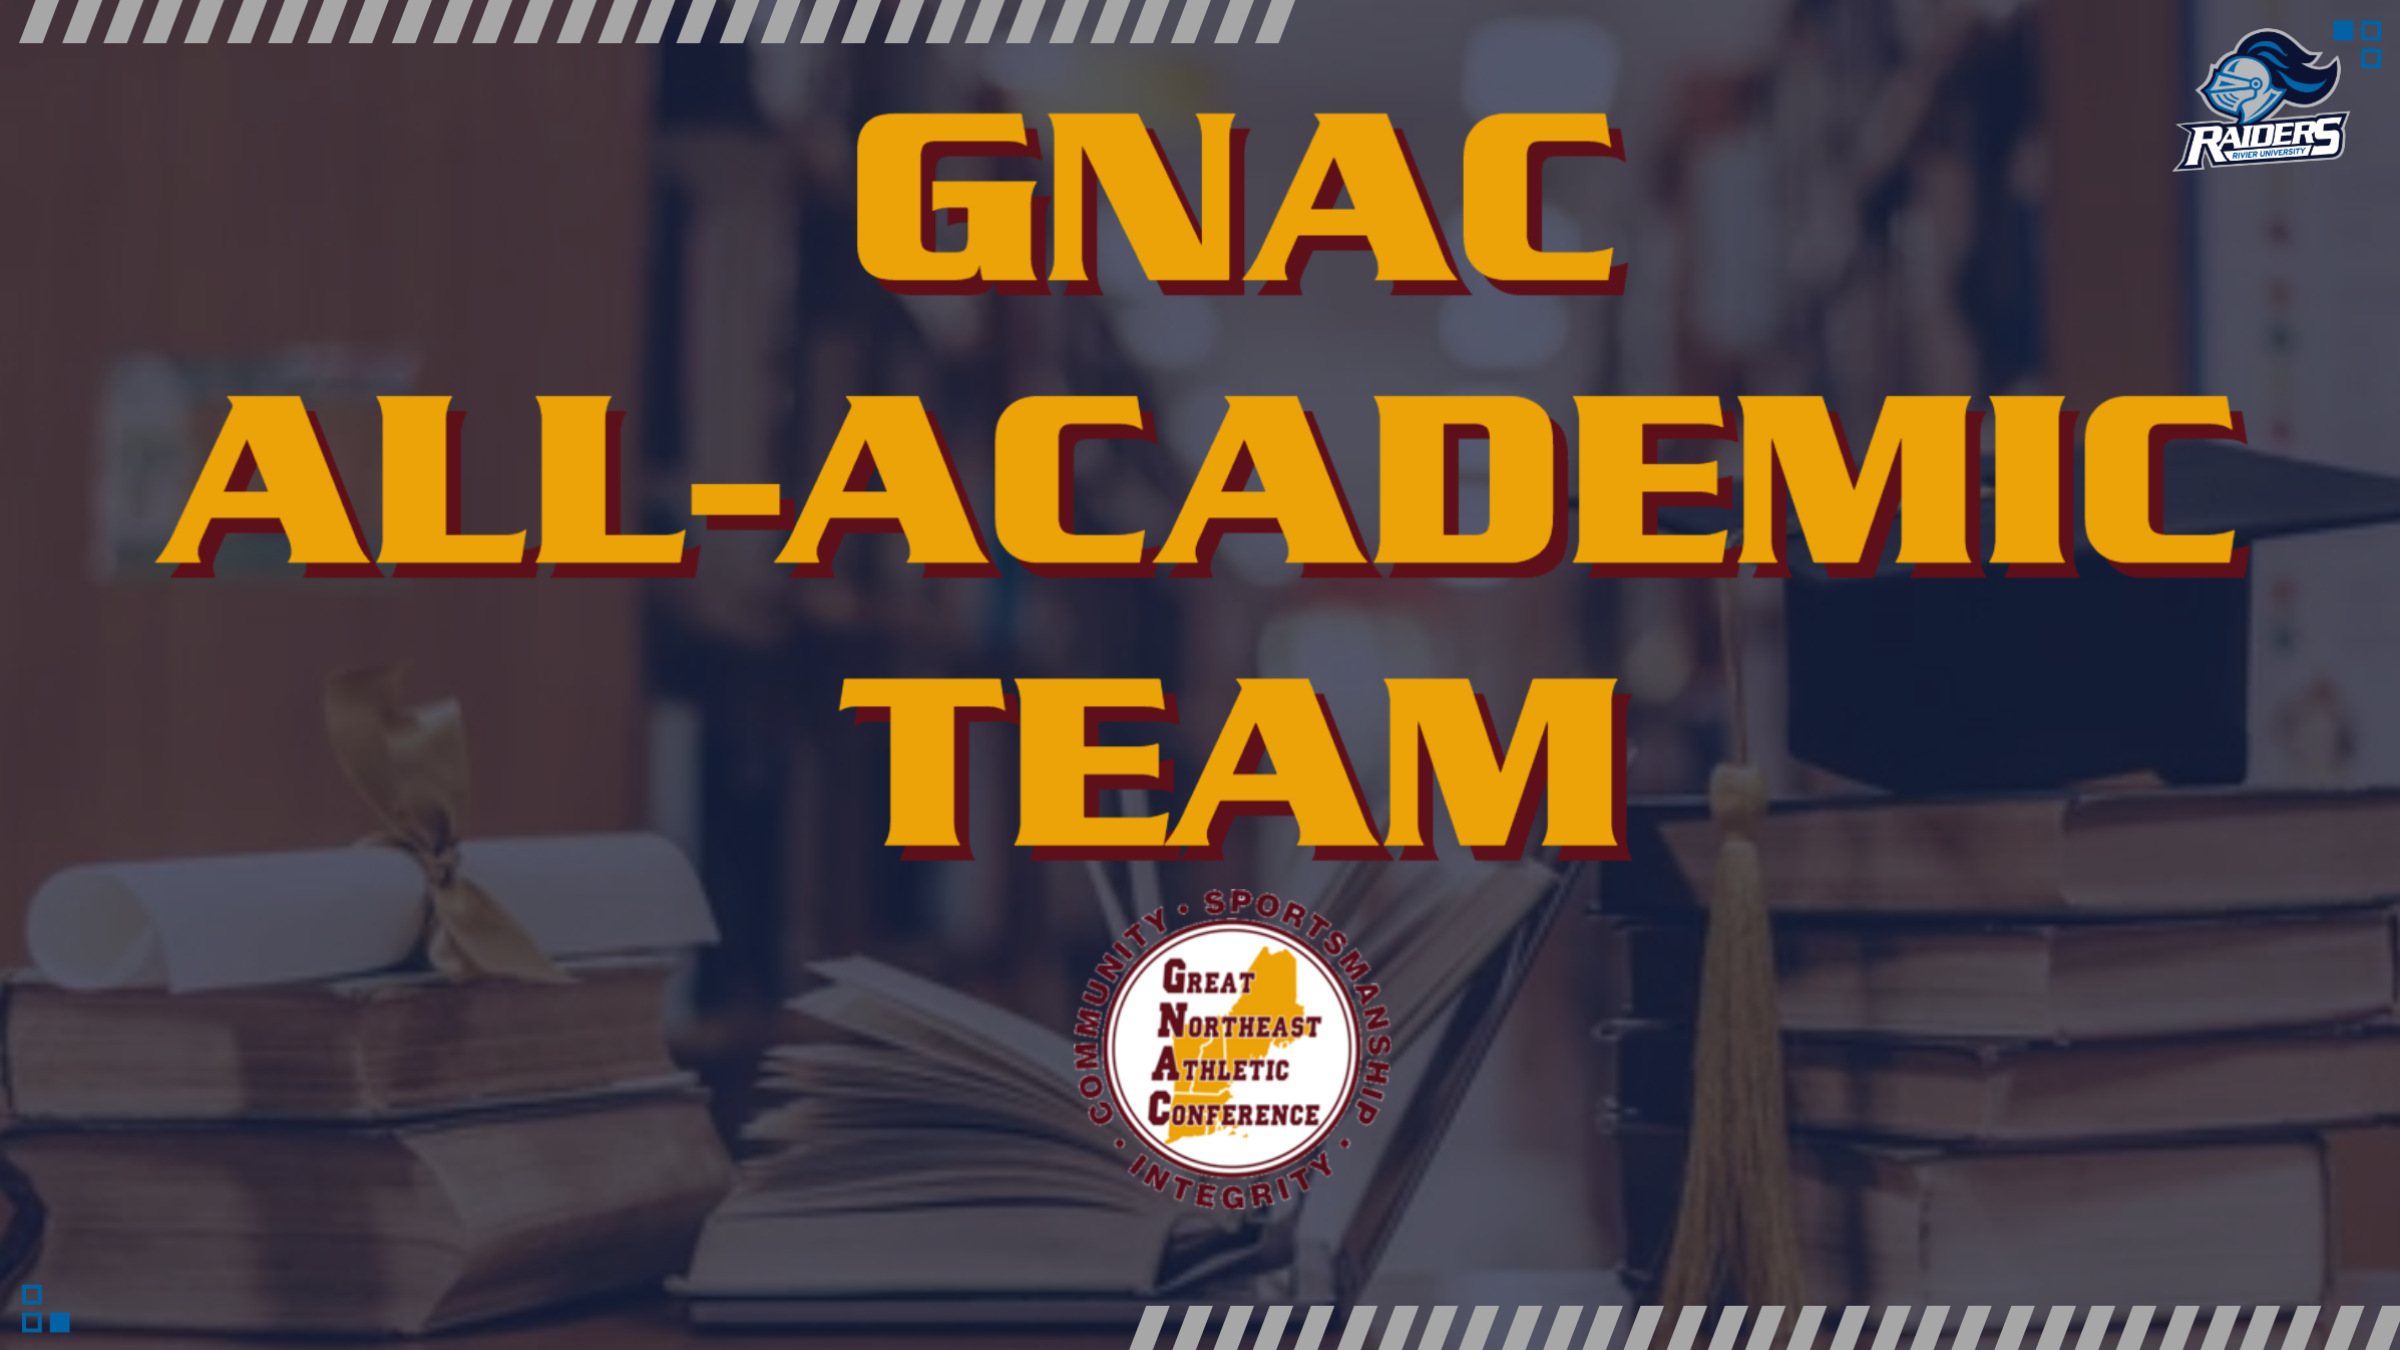 Raiders Post 87 GNAC All-Academic Honors